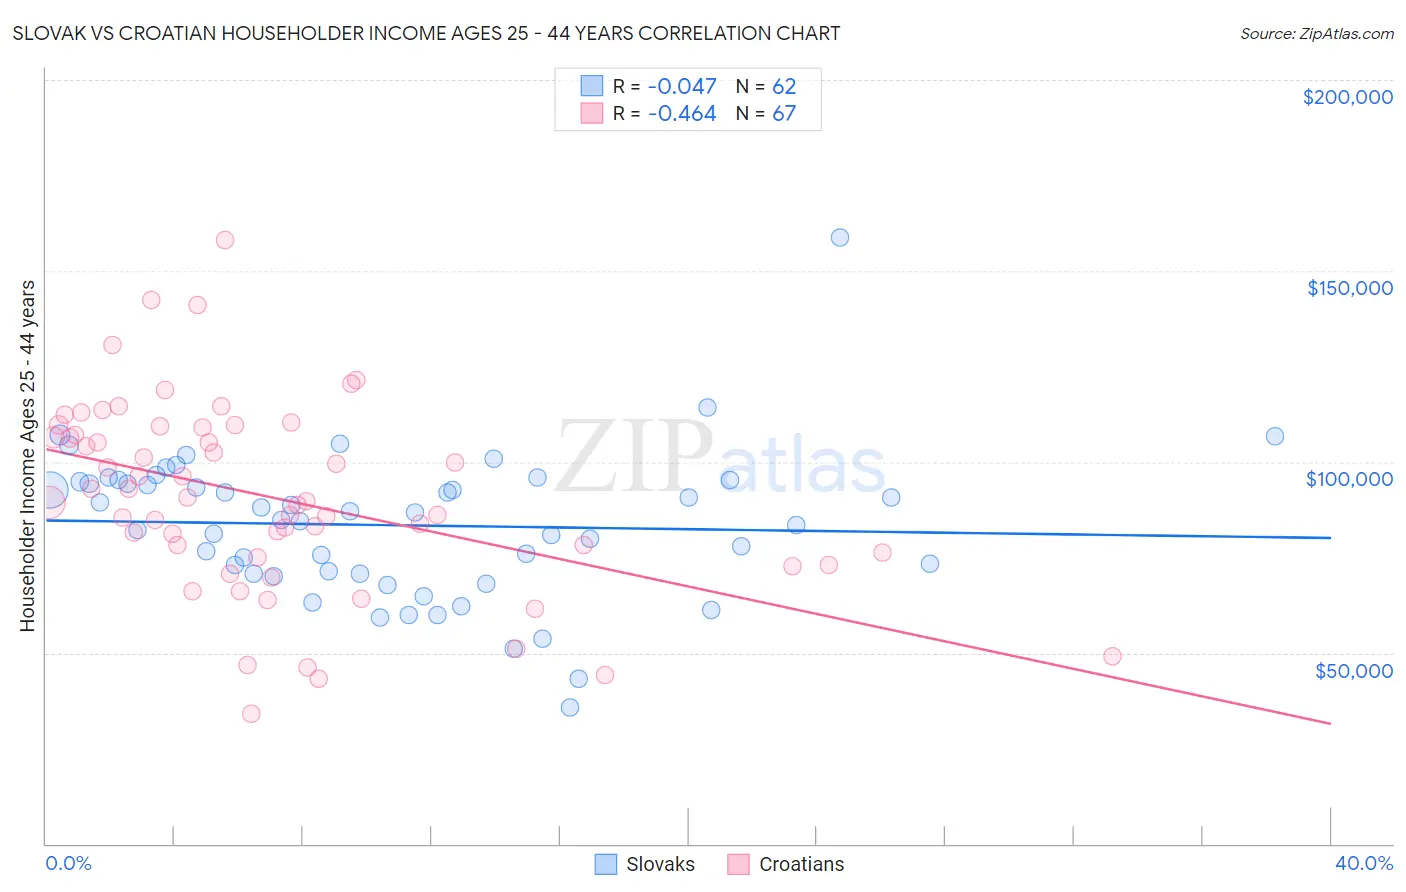 Slovak vs Croatian Householder Income Ages 25 - 44 years